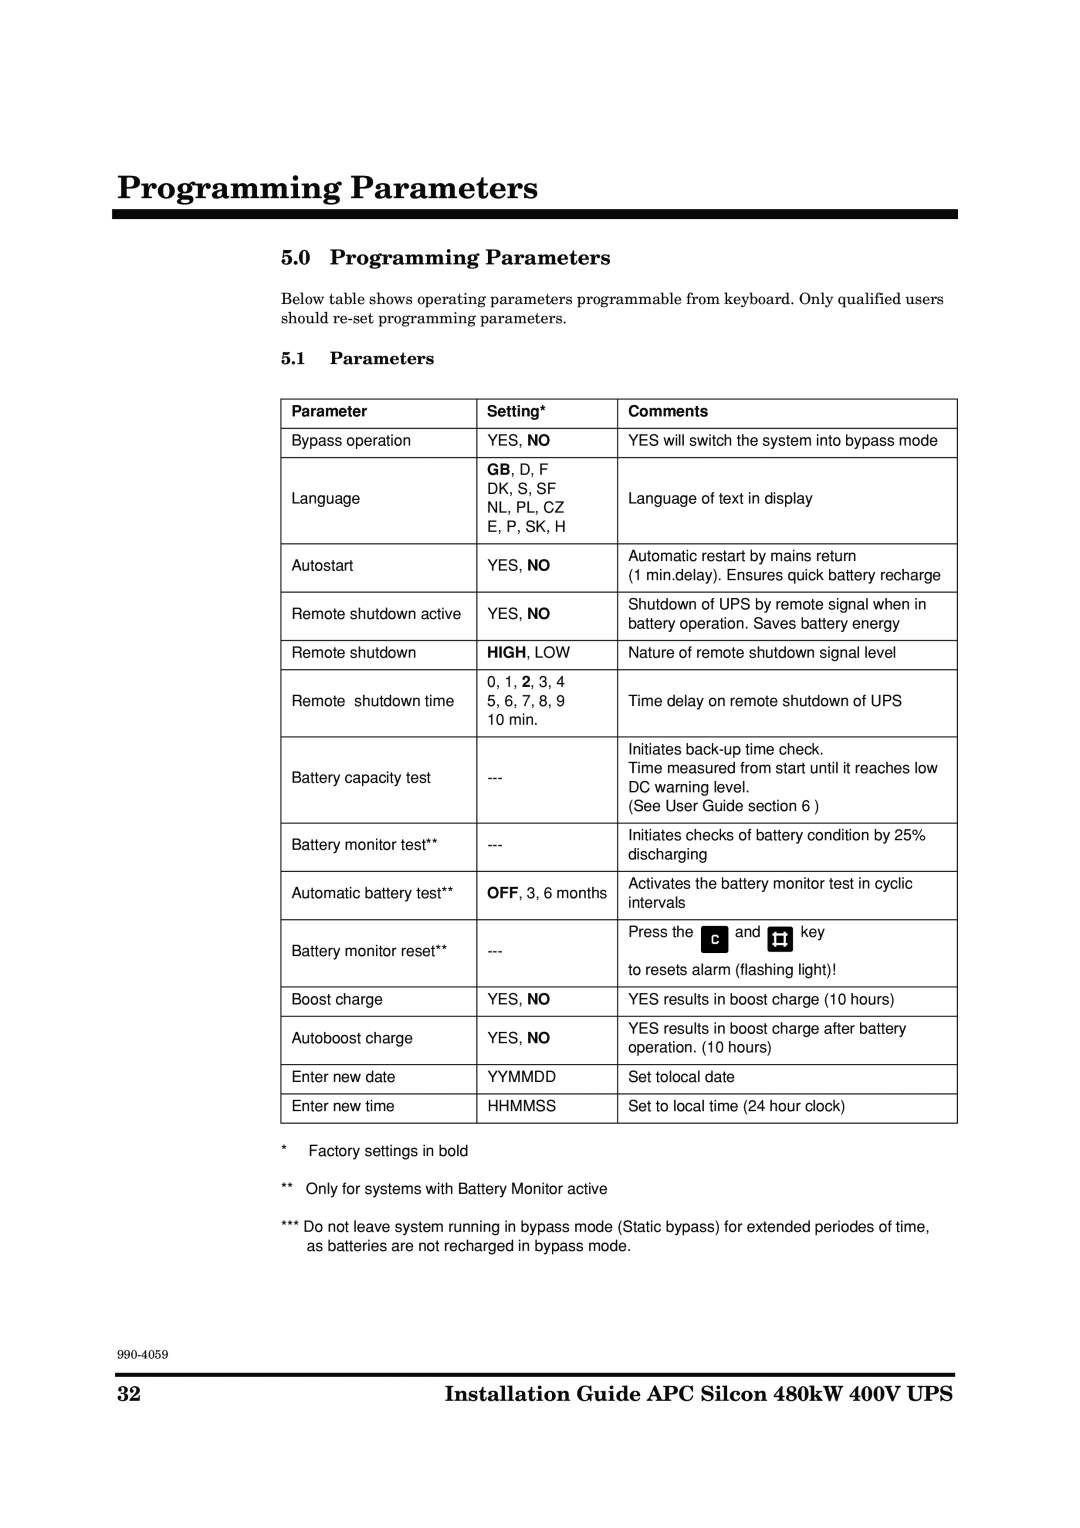 American Power Conversion manual Programming Parameters, Installation Guide APC Silcon 480kW 400V UPS 